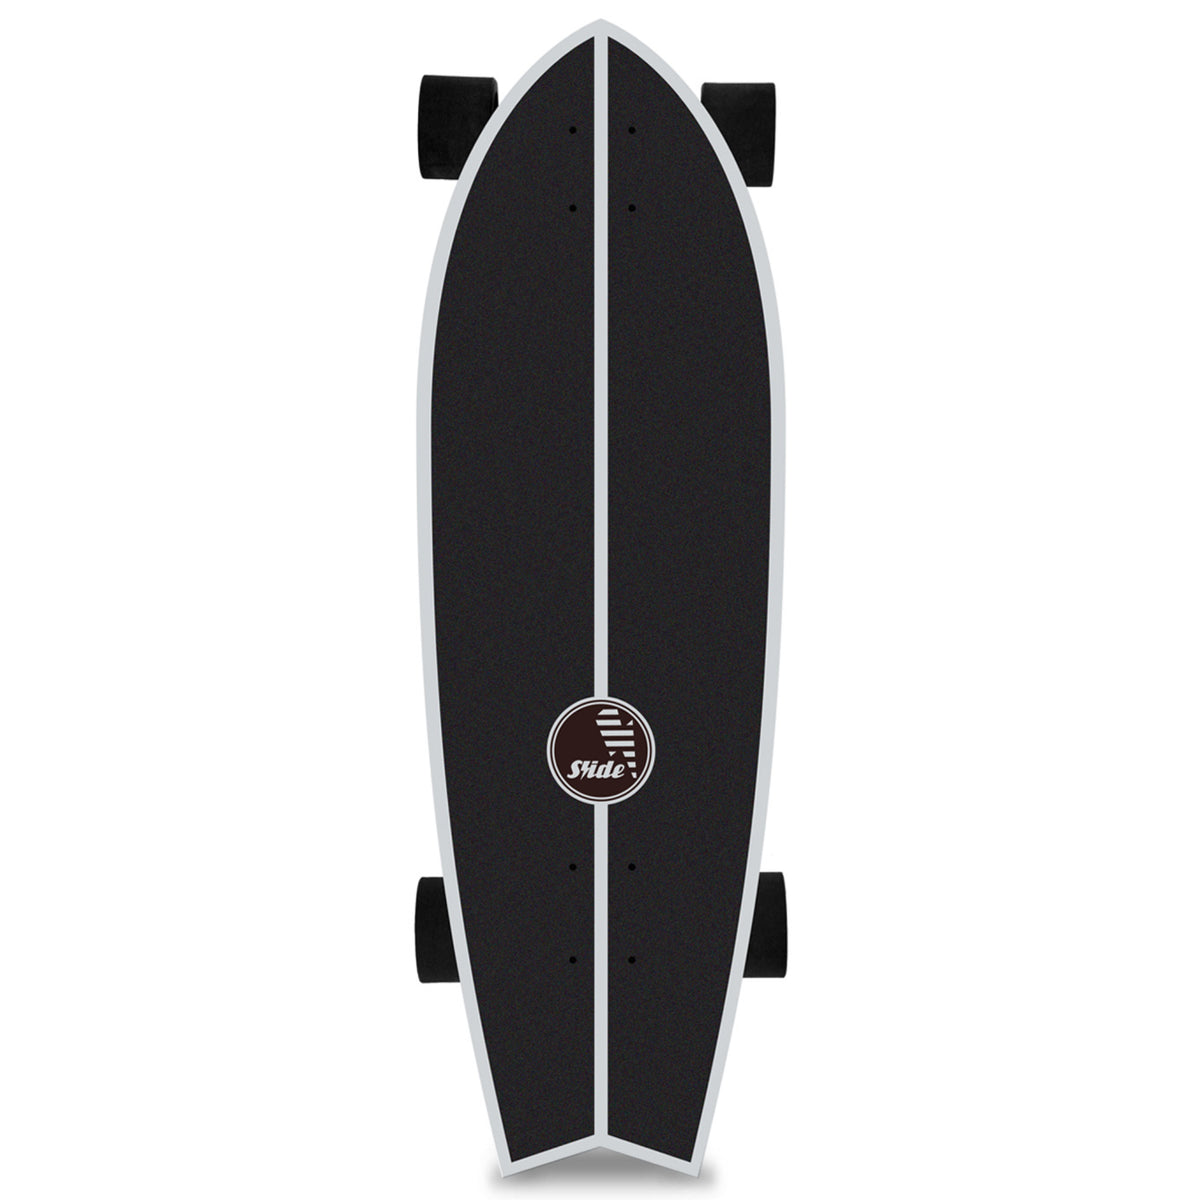 Slide Fish Tec-Tonic Surf Skateboard - 32